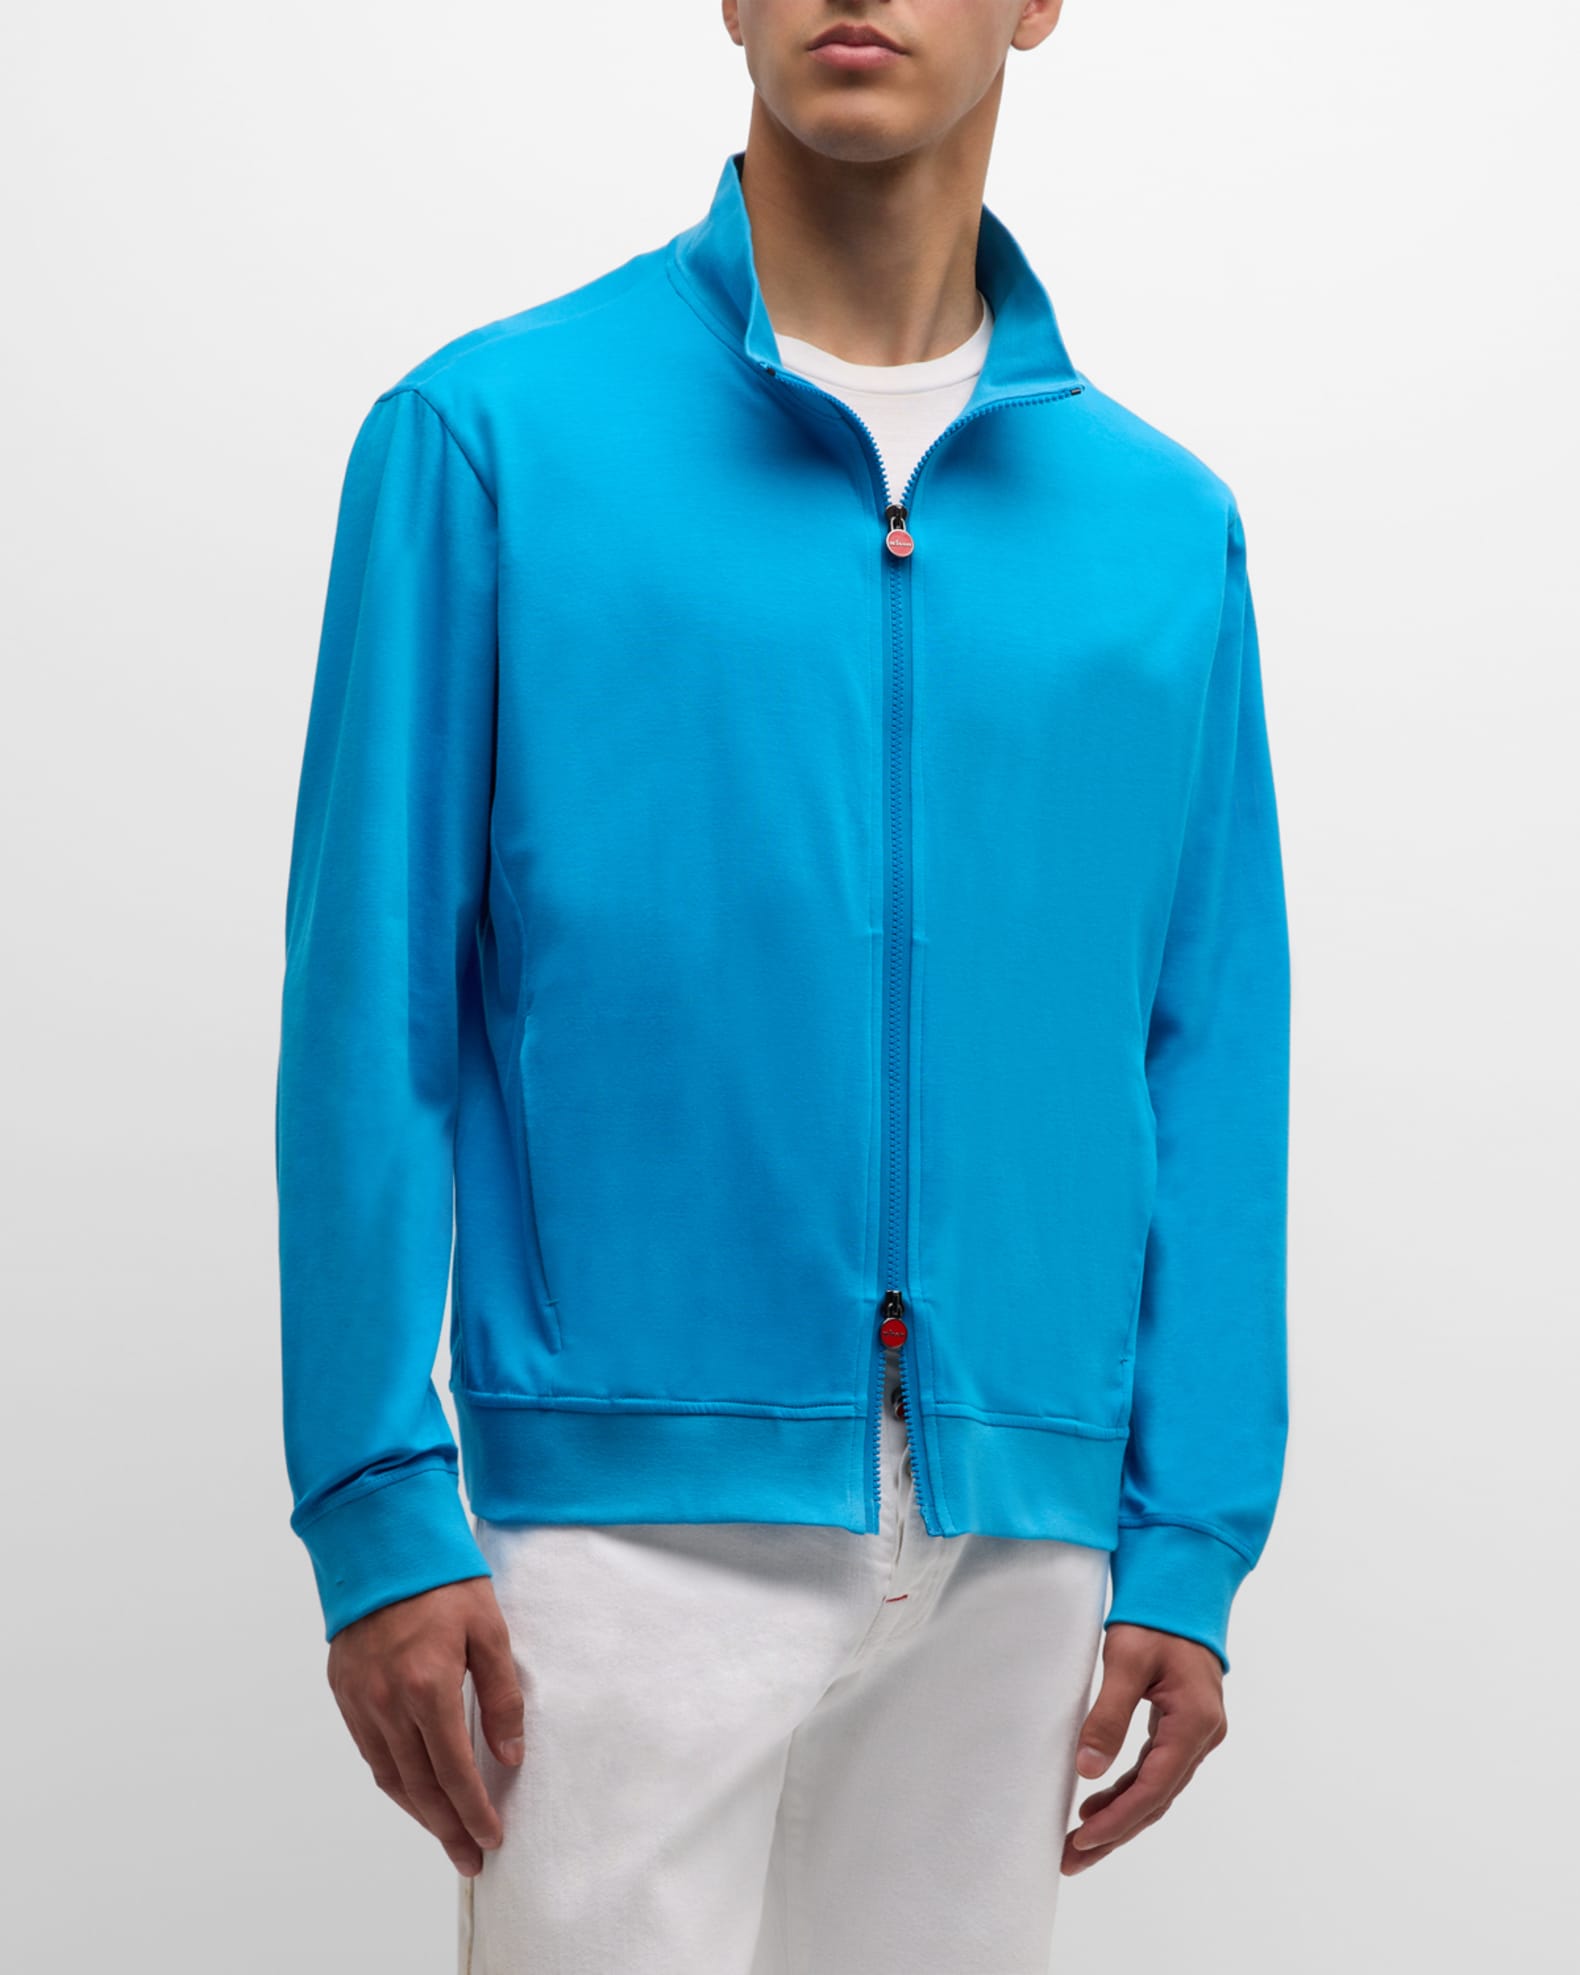 Ciro Cotton Hooded Sweatshirt